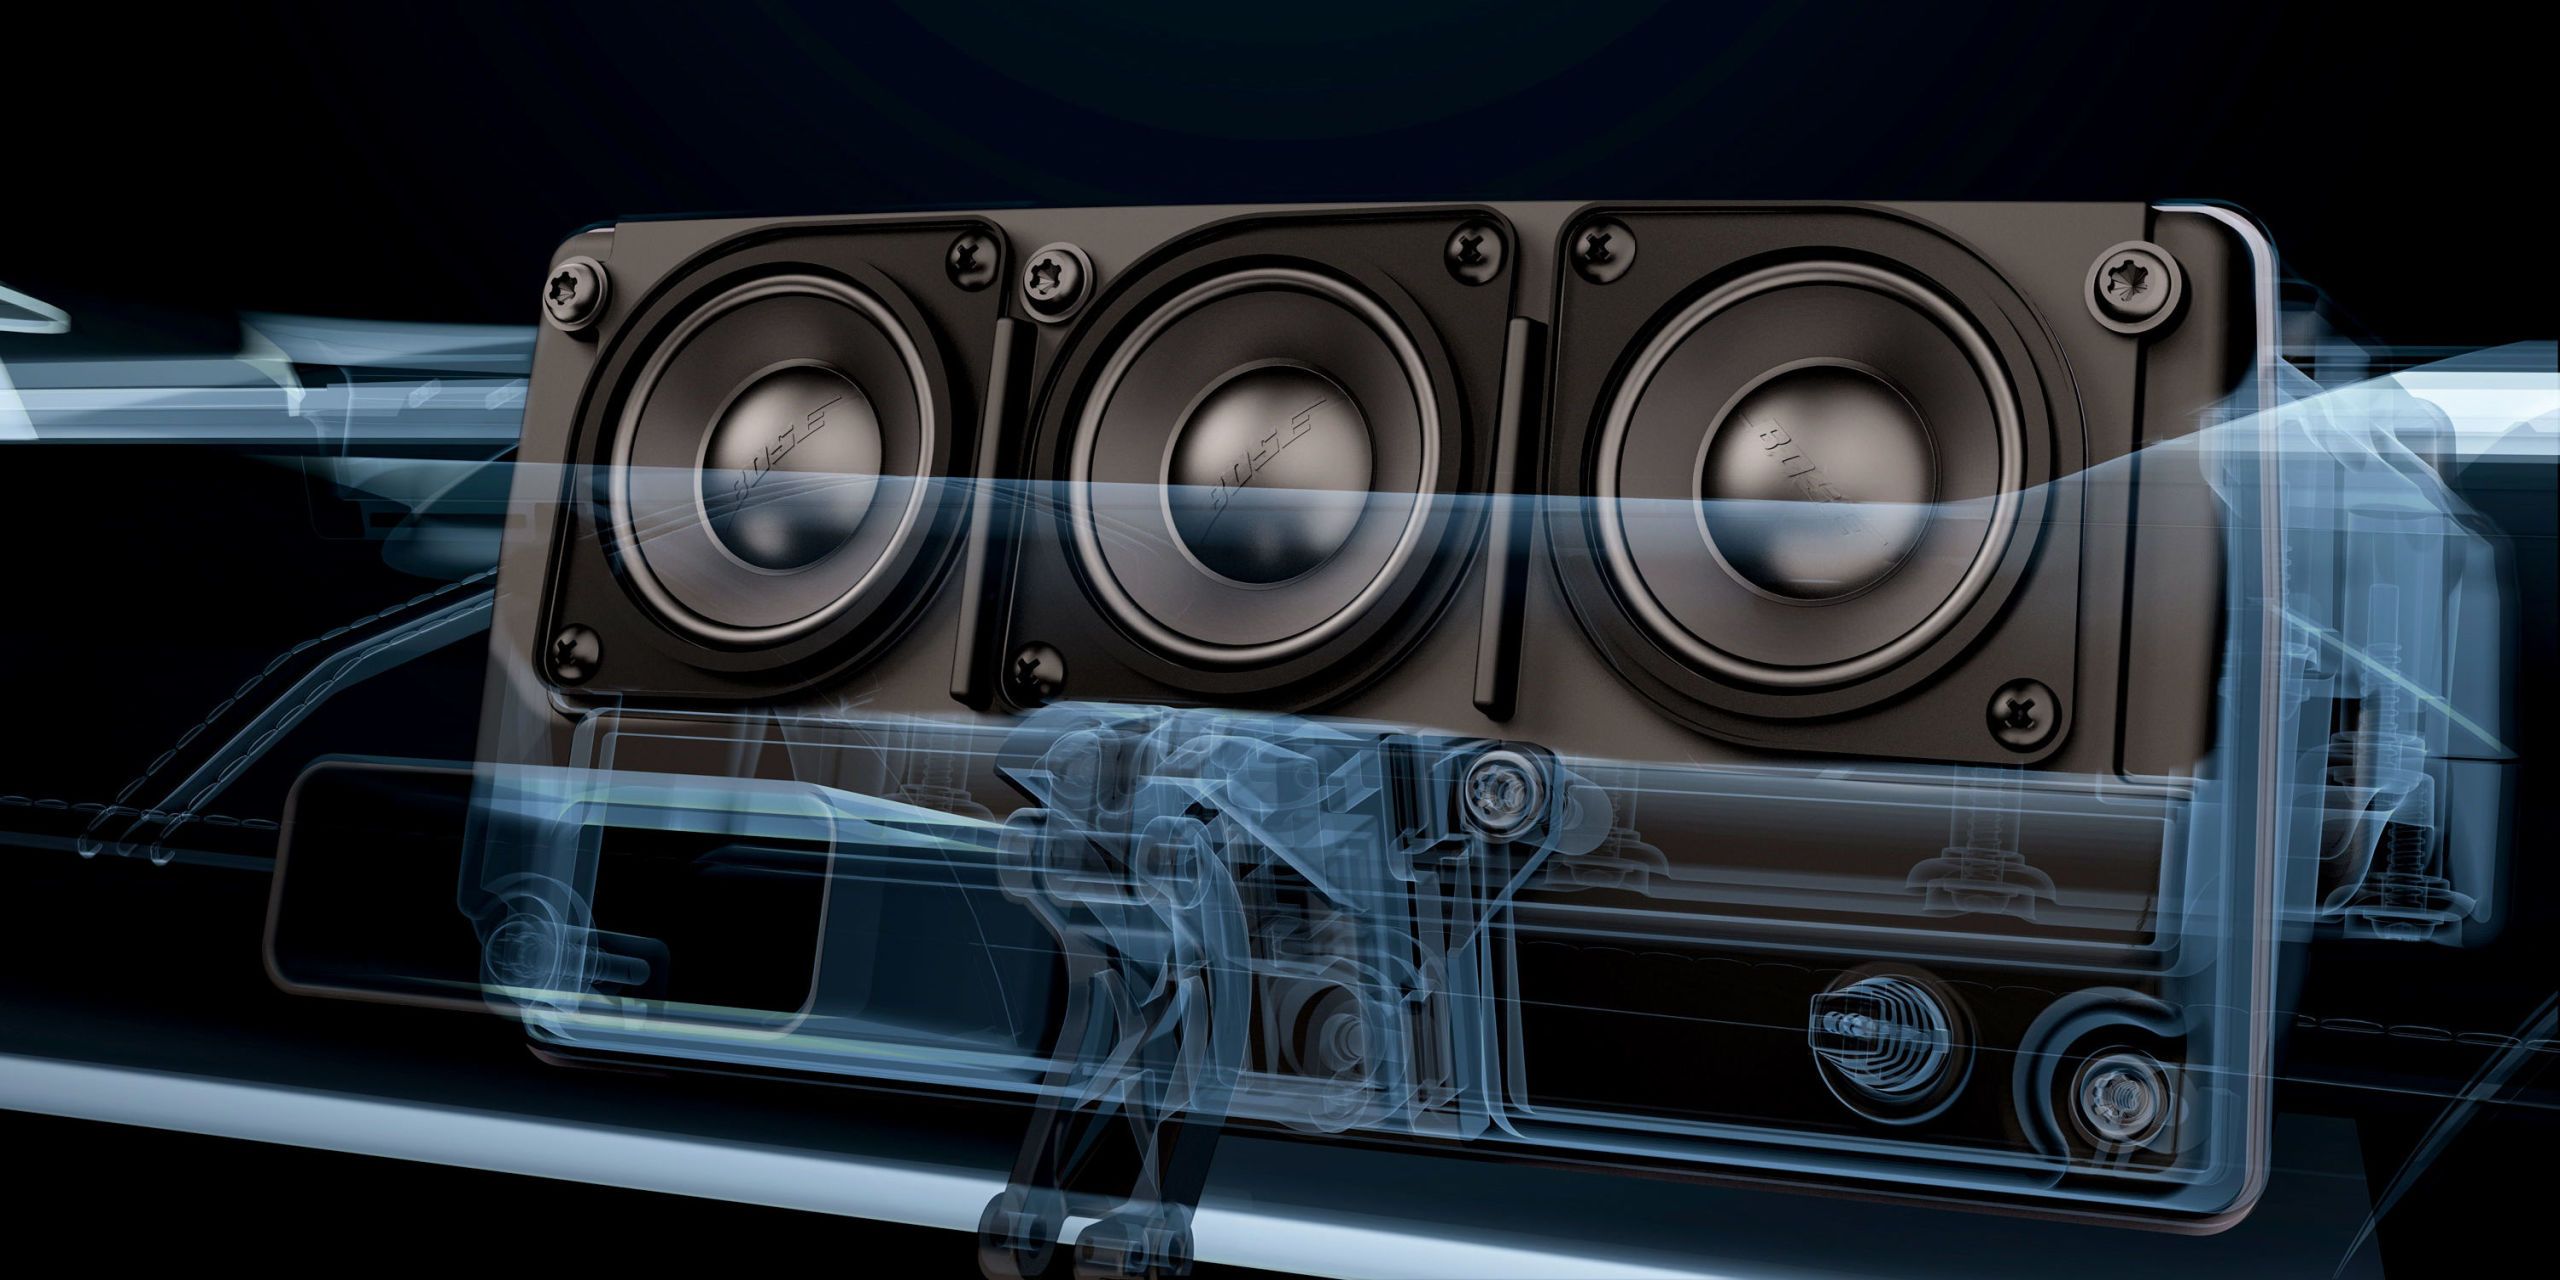 Impianto car audio Bose